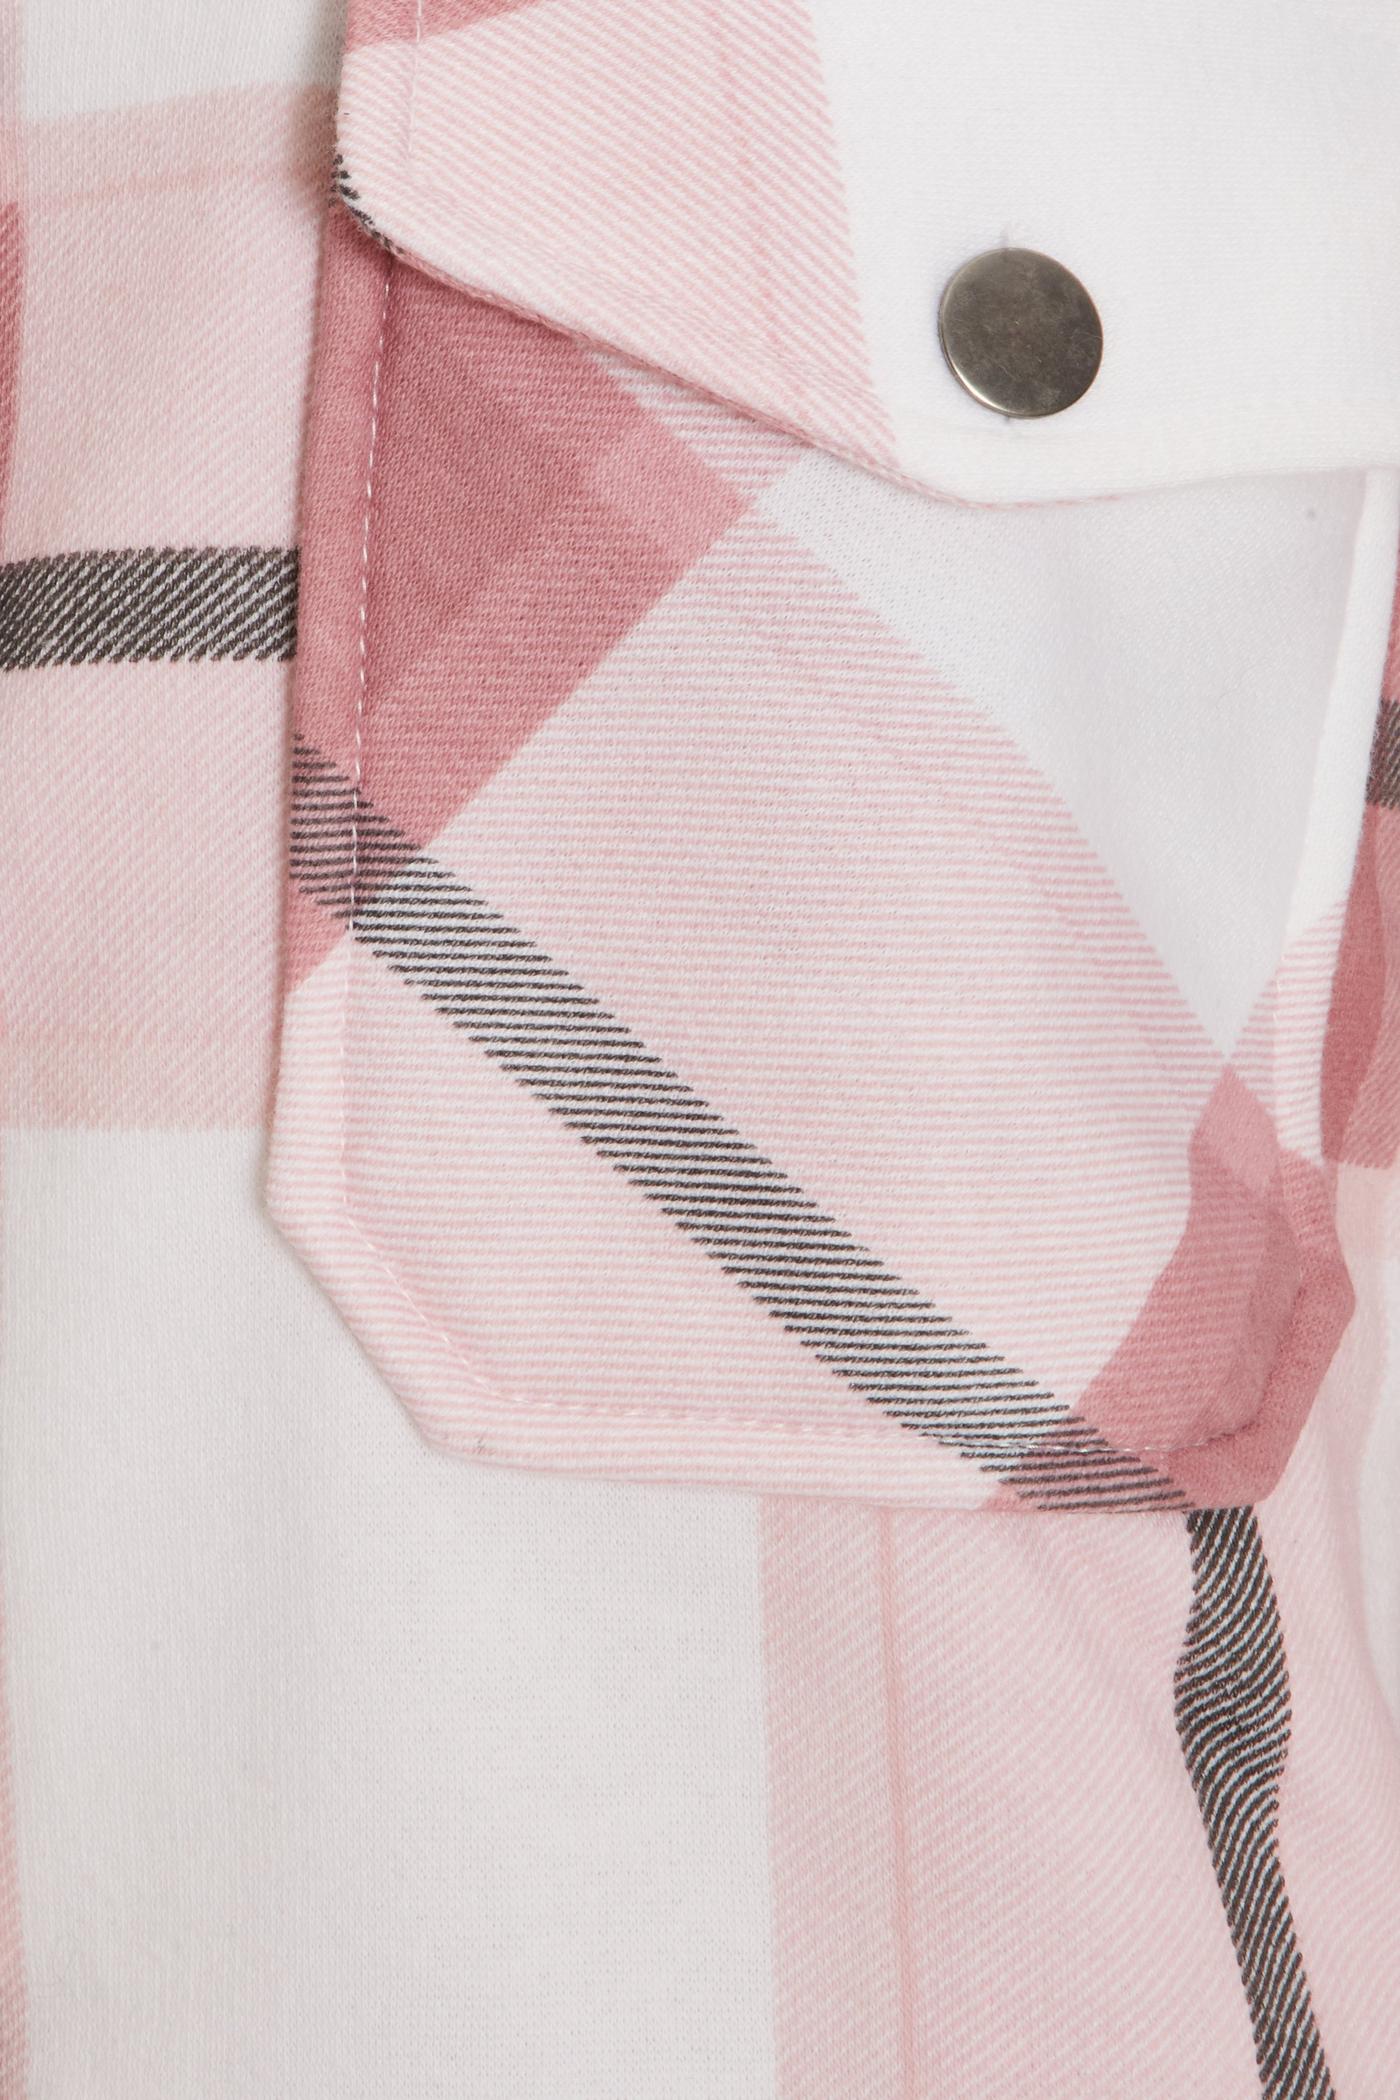 Pink & wht Checked Shacket For Her-LSHKT-0020-Pink White - FactoryX.pk